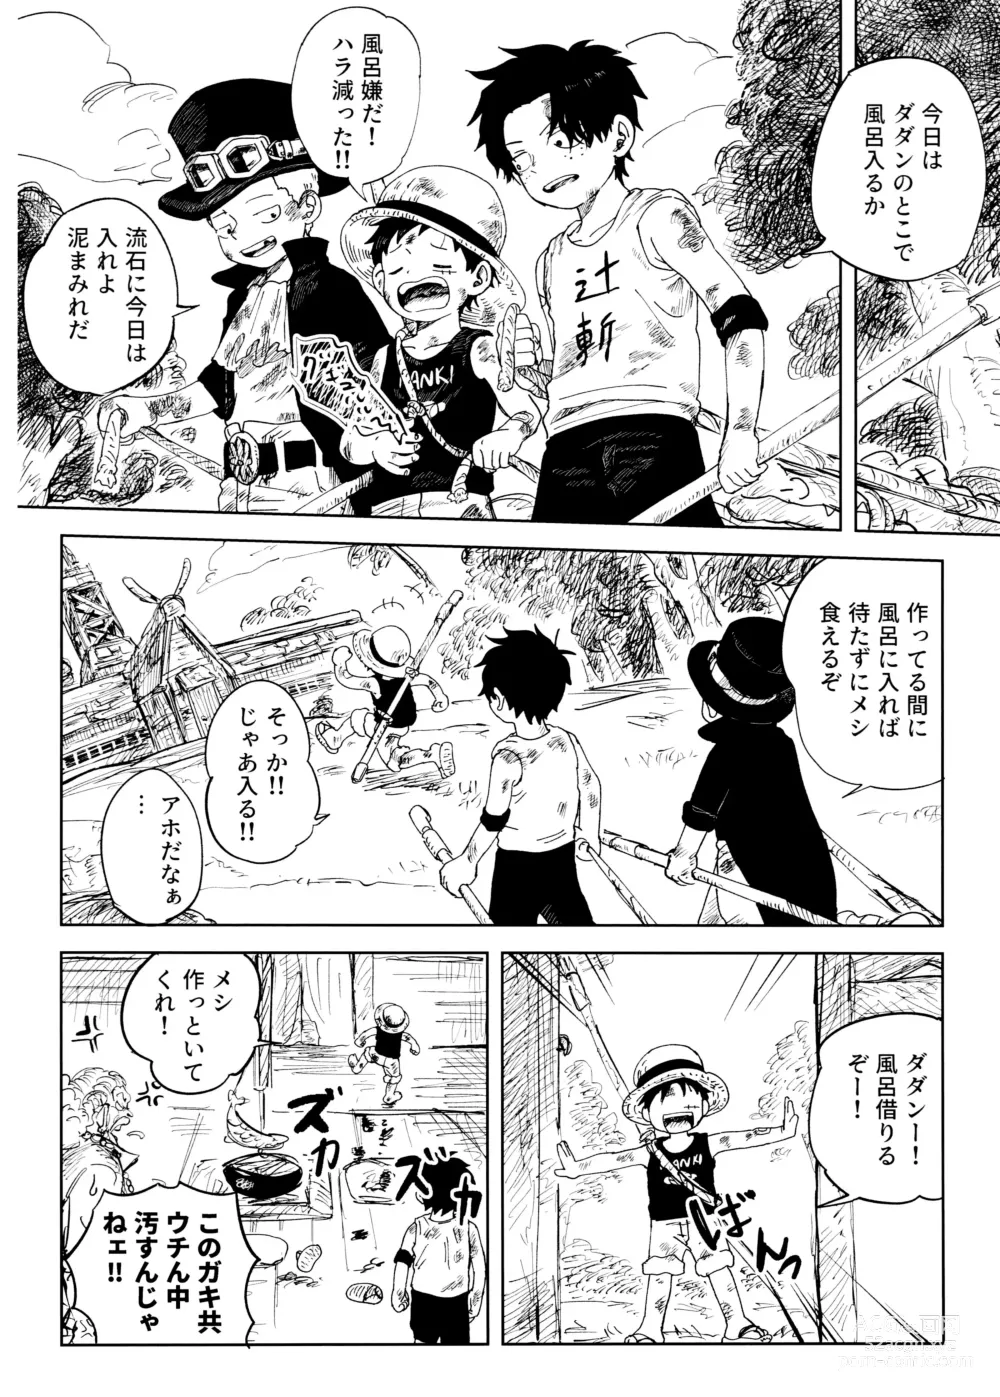 Page 7 of doujinshi Himitsu no Colubo Yama